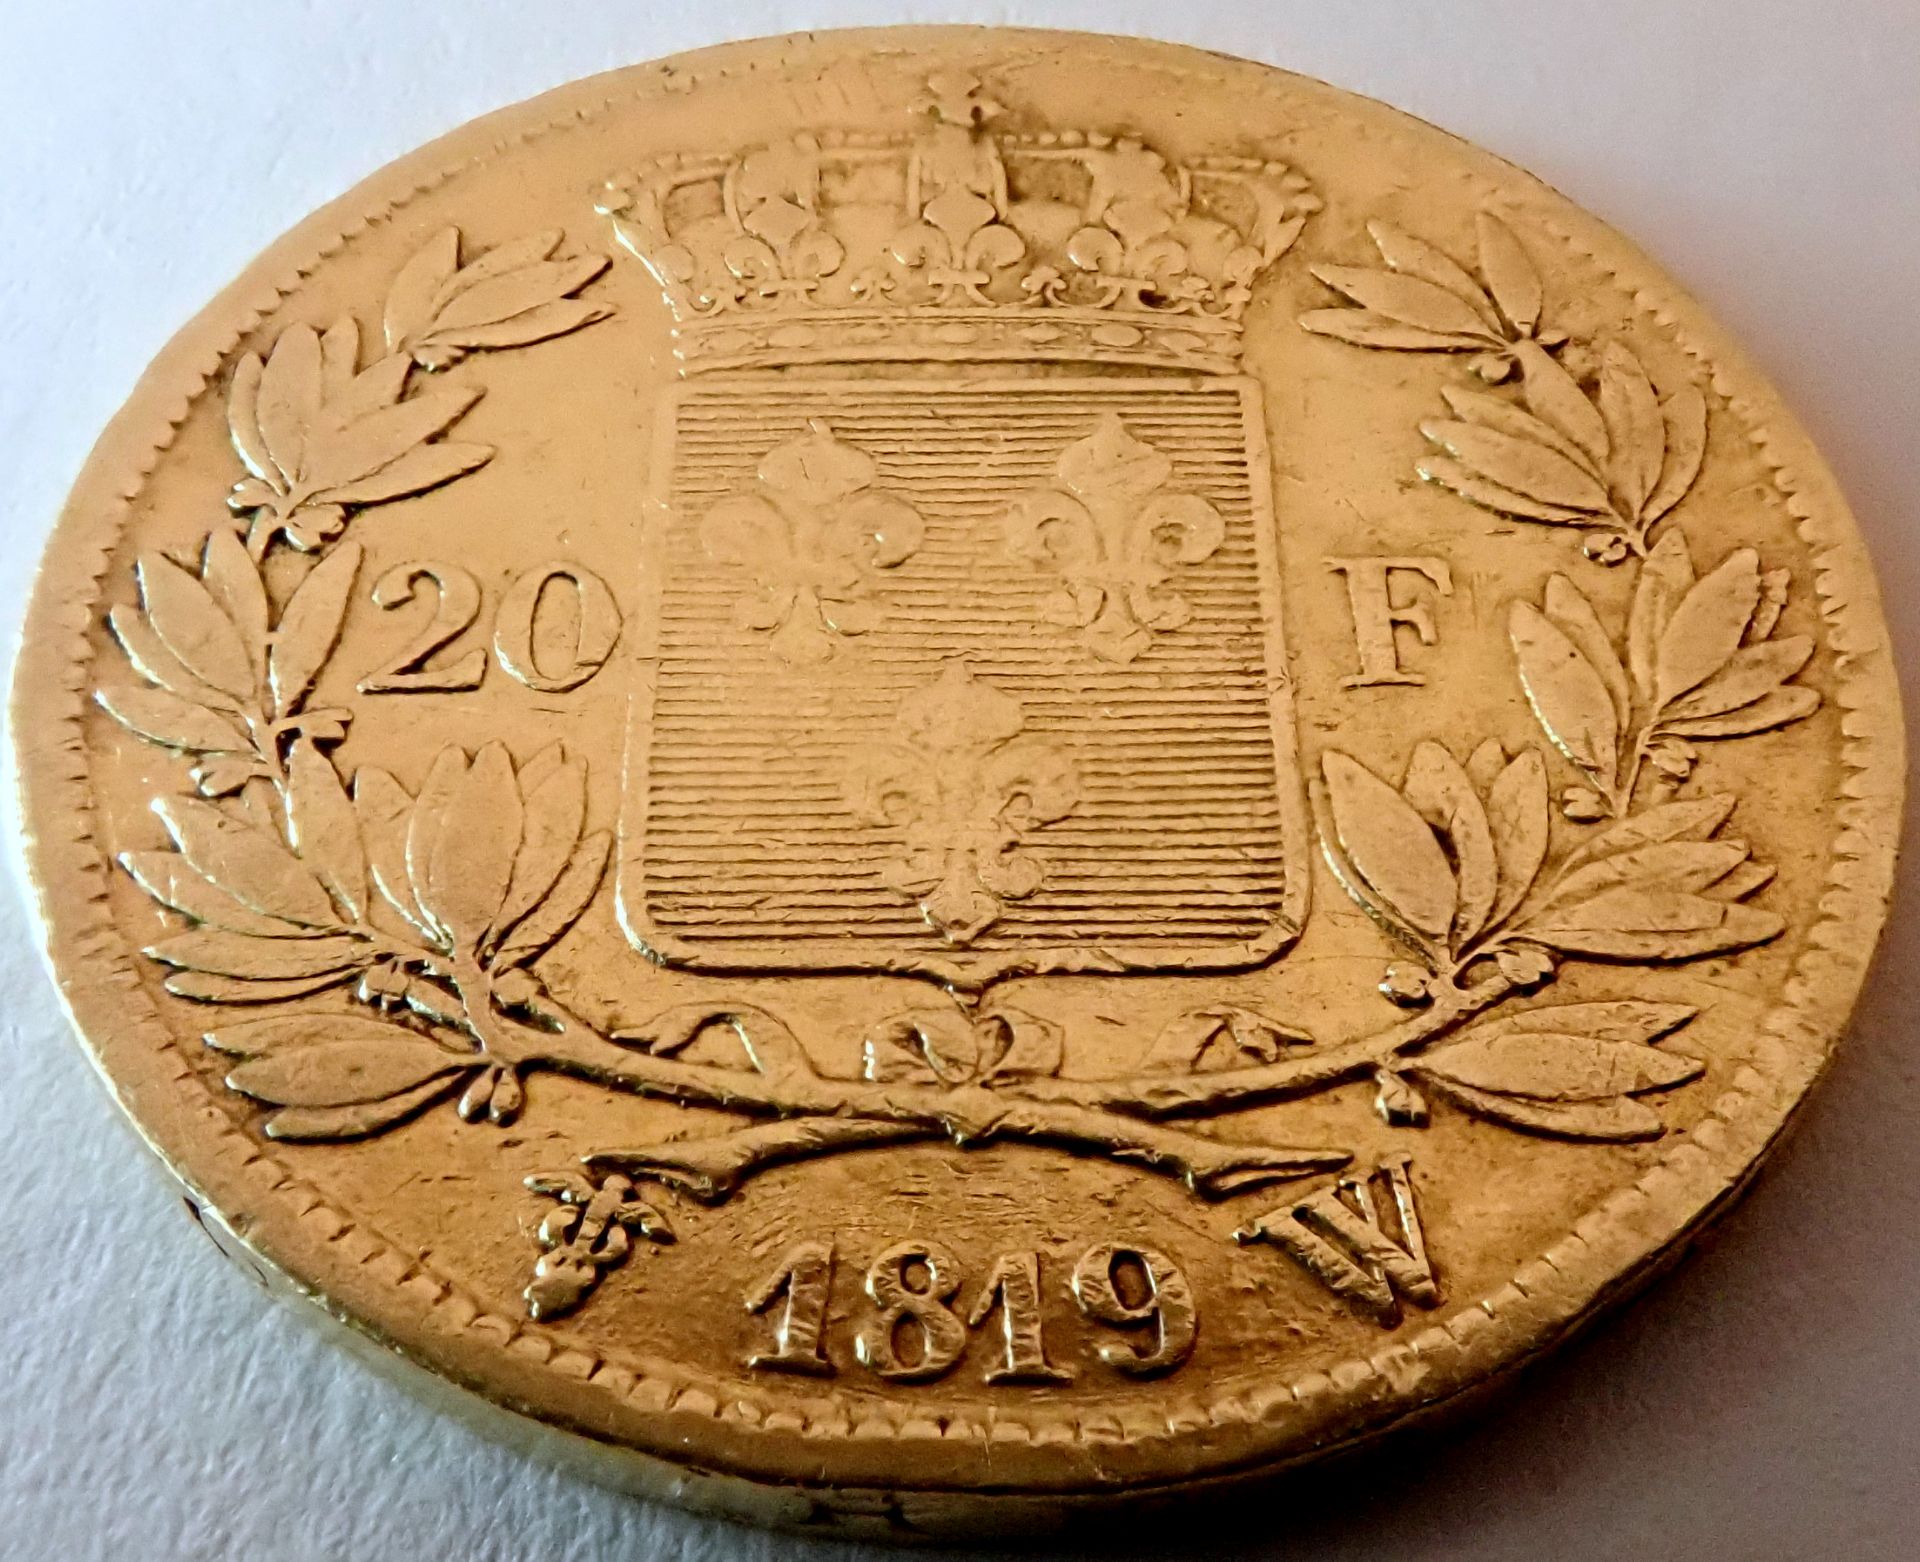 20 Francs - Louis XVIII. 1816 - 1824 - Image 2 of 2